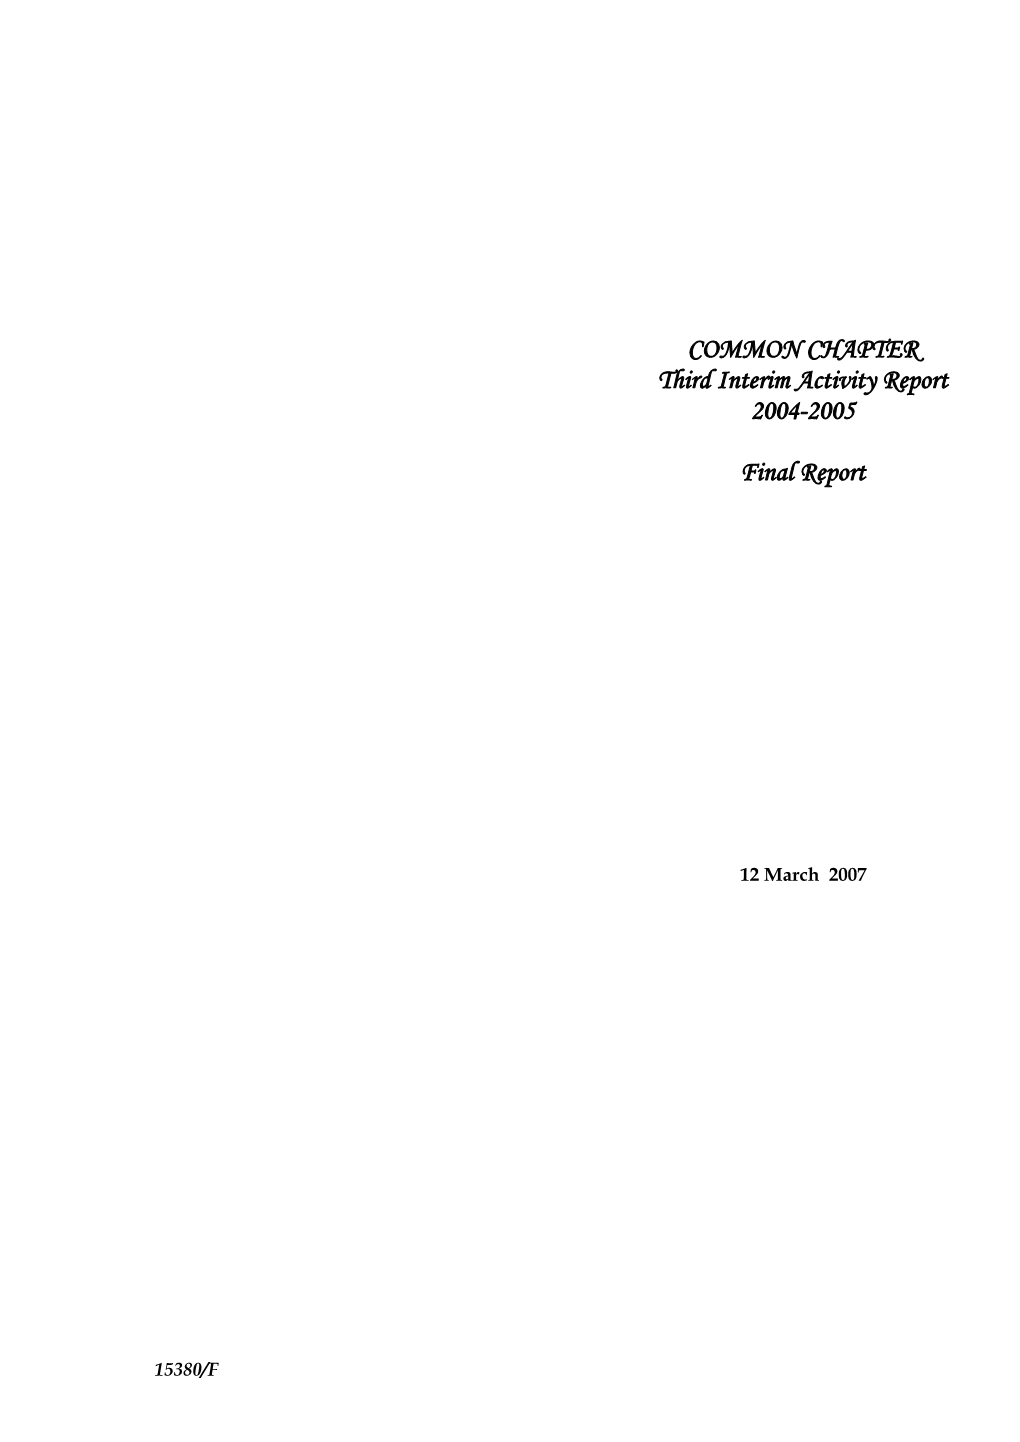 COMMON CHAPTER Third Interim Activity Report 2004-2005 Final